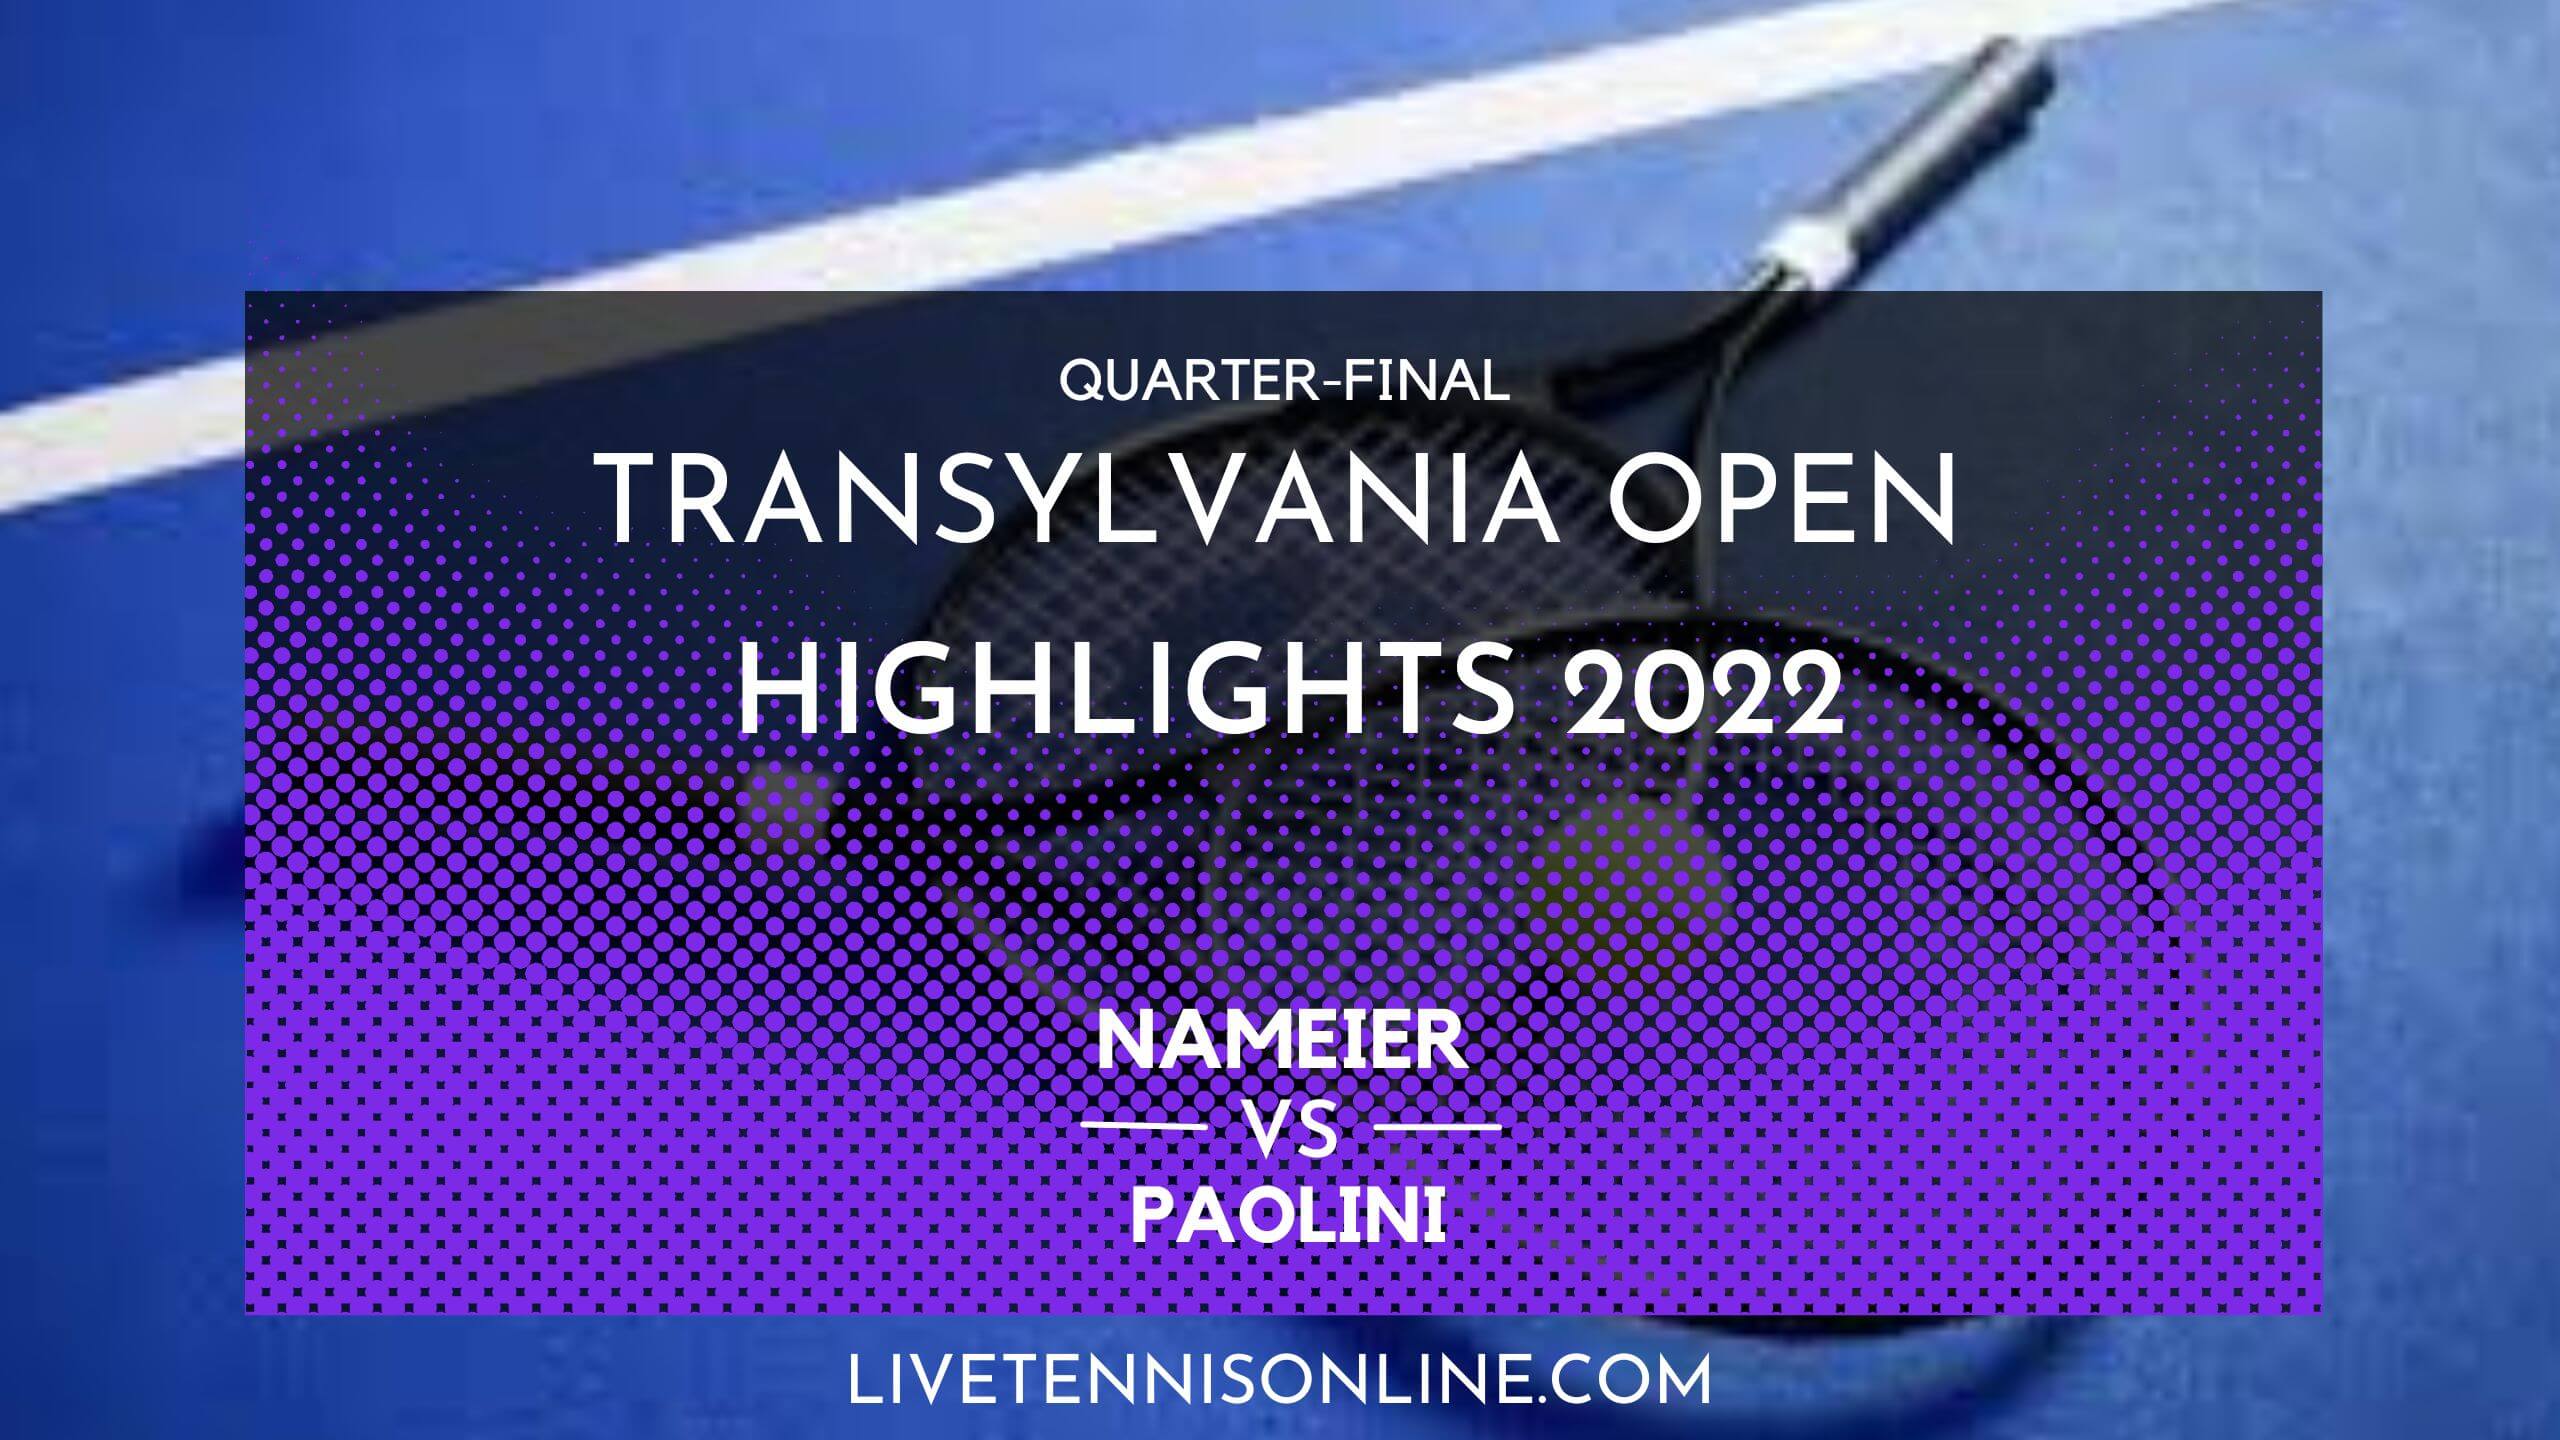 Niemeier Vs Paolini QF Highlights 2022 Transylvania Open